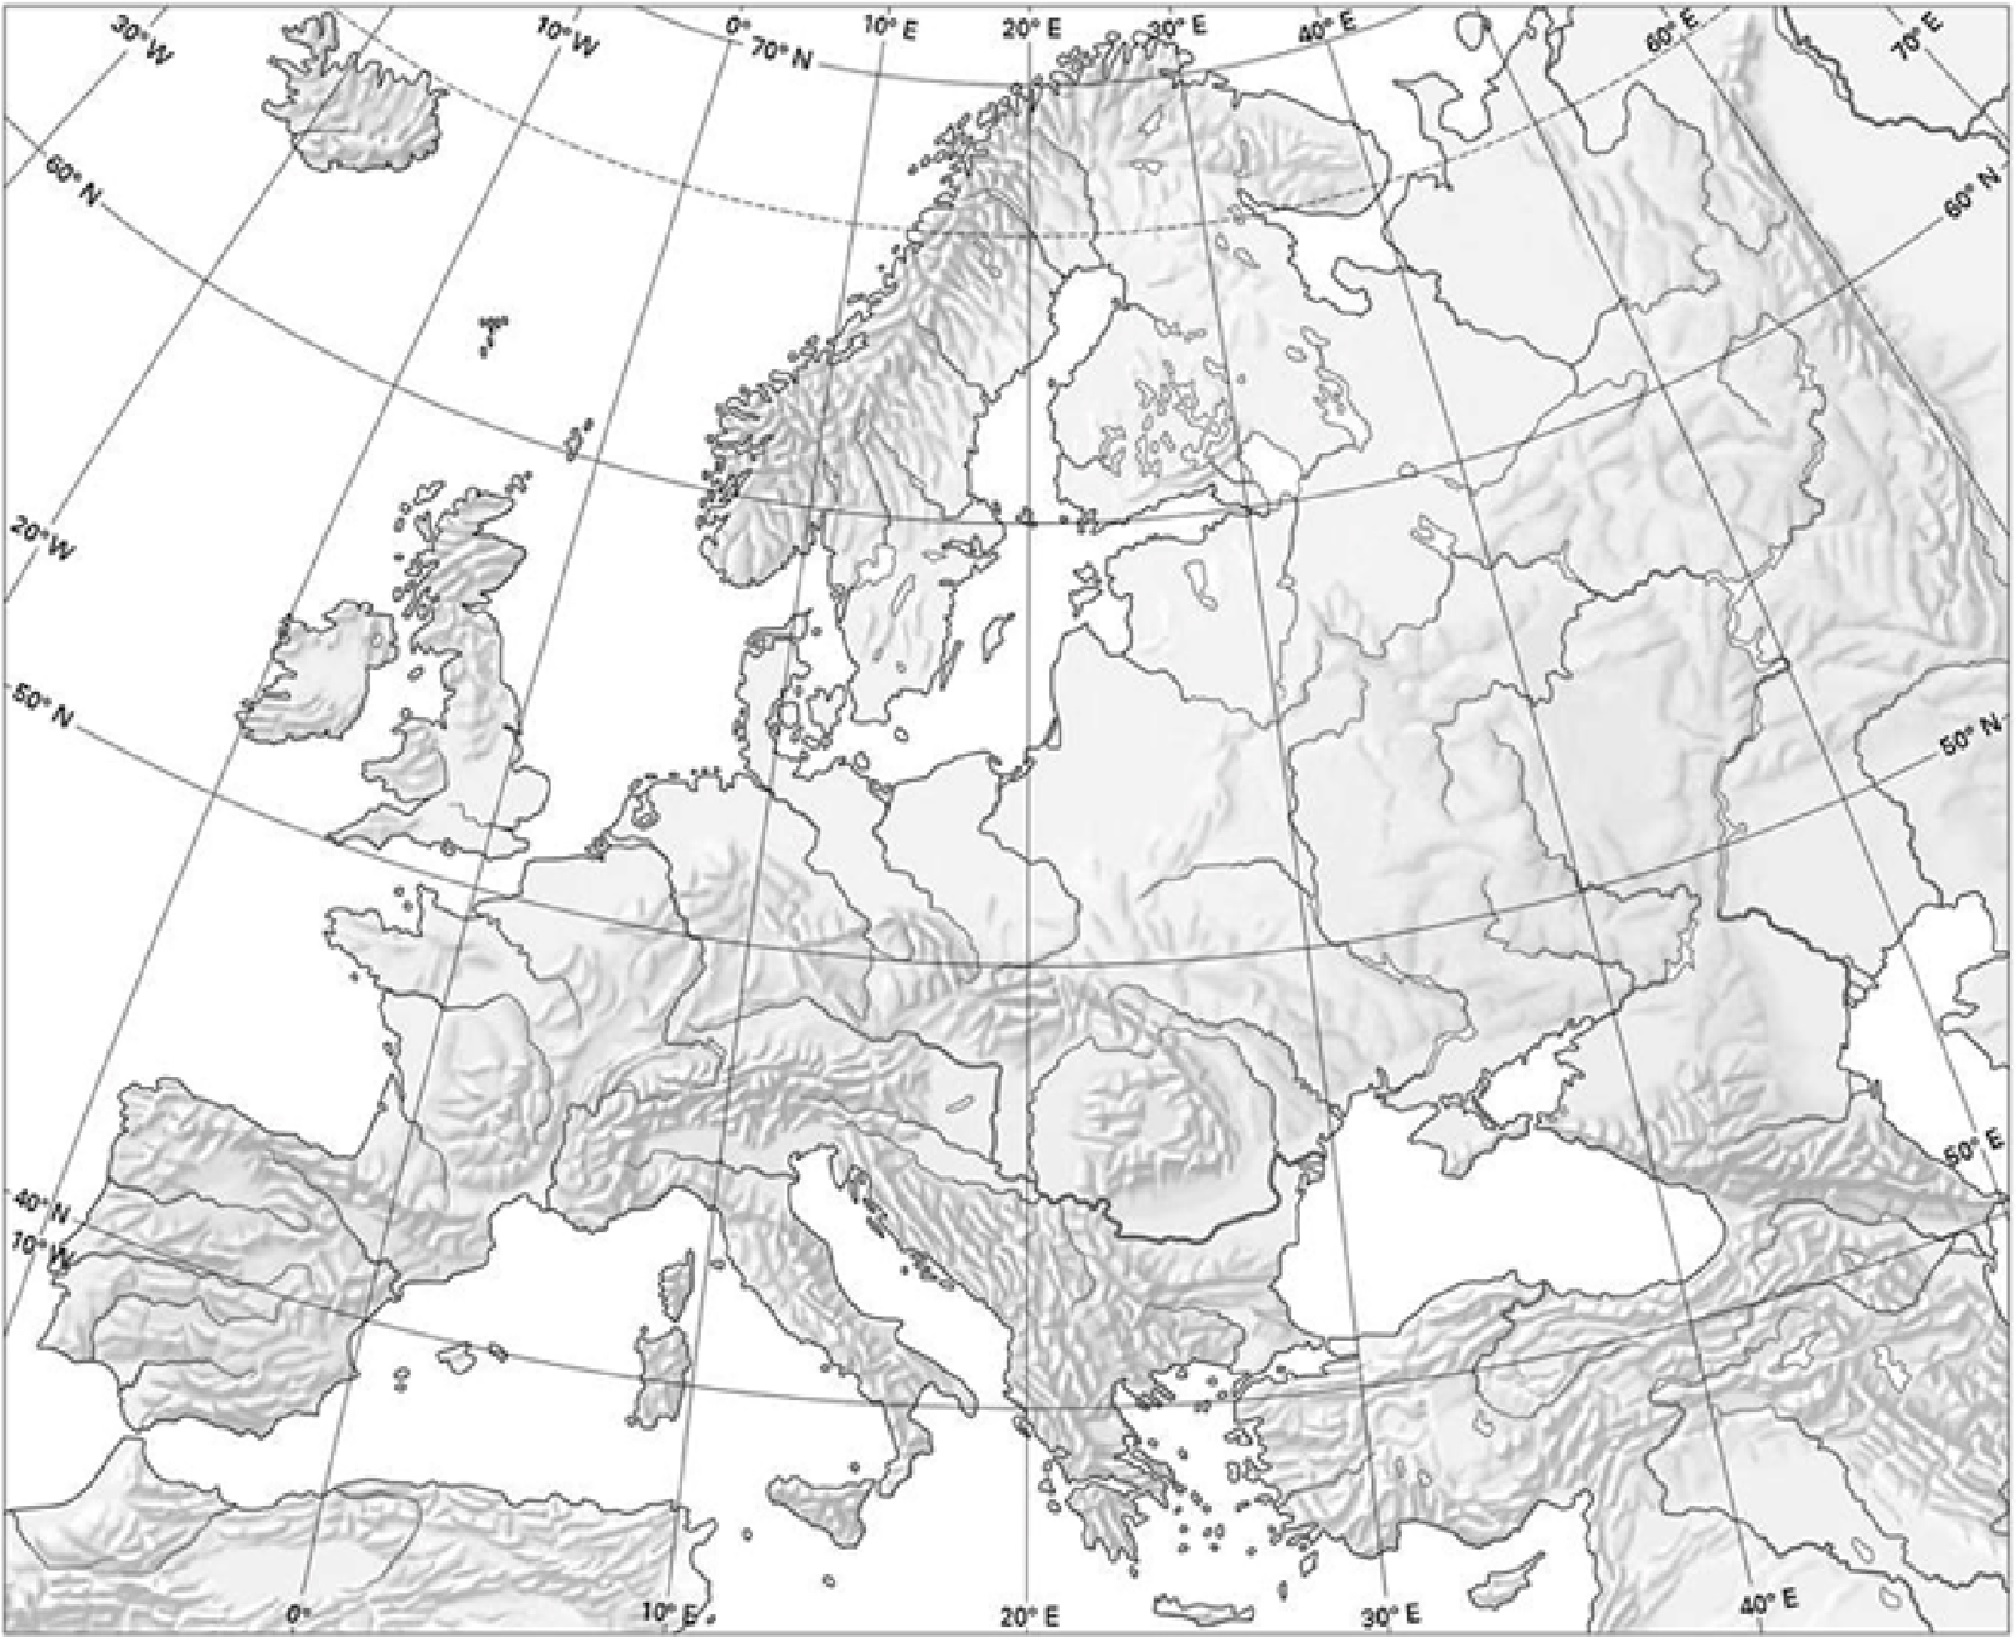 prazna karta europe I. osnovna škola Čakovec   Geografija   Slijepa karta Europe i  prazna karta europe